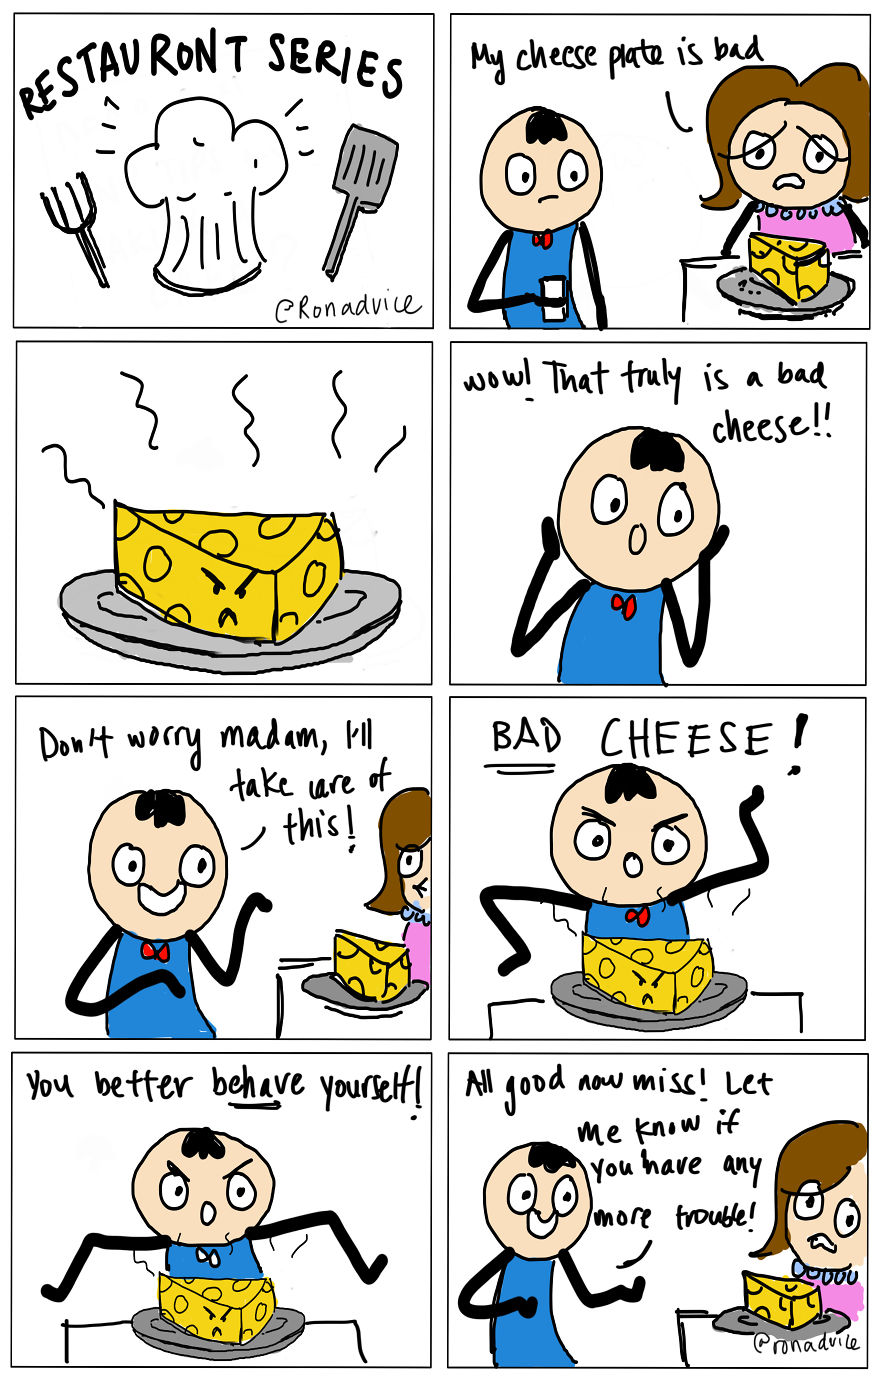 Bad Cheese